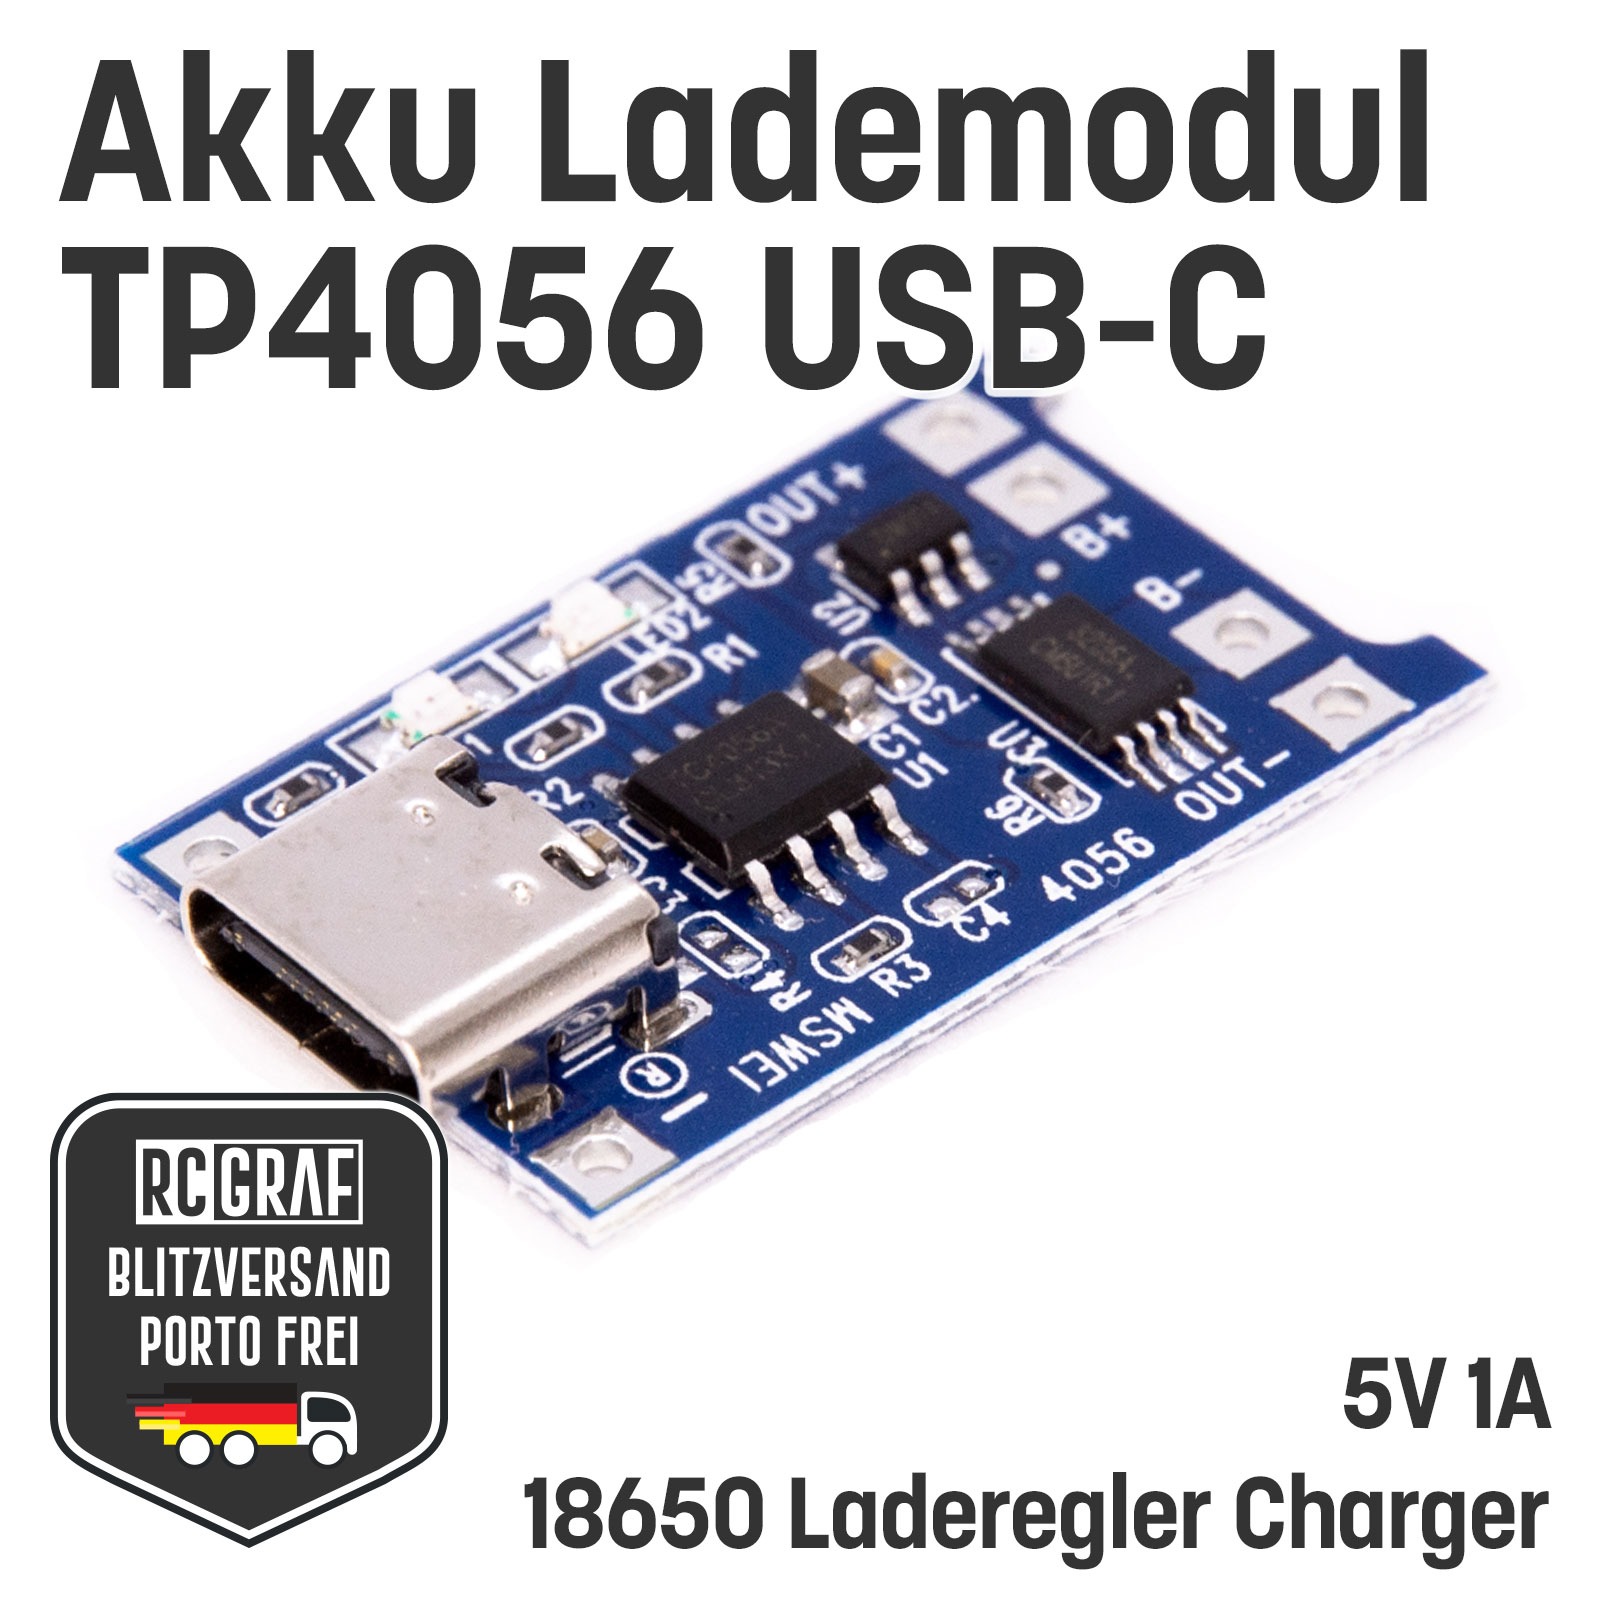 10x Akku Lademodul 5V 1A TP4056 USB C 18650 mit Schutzschaltung 2